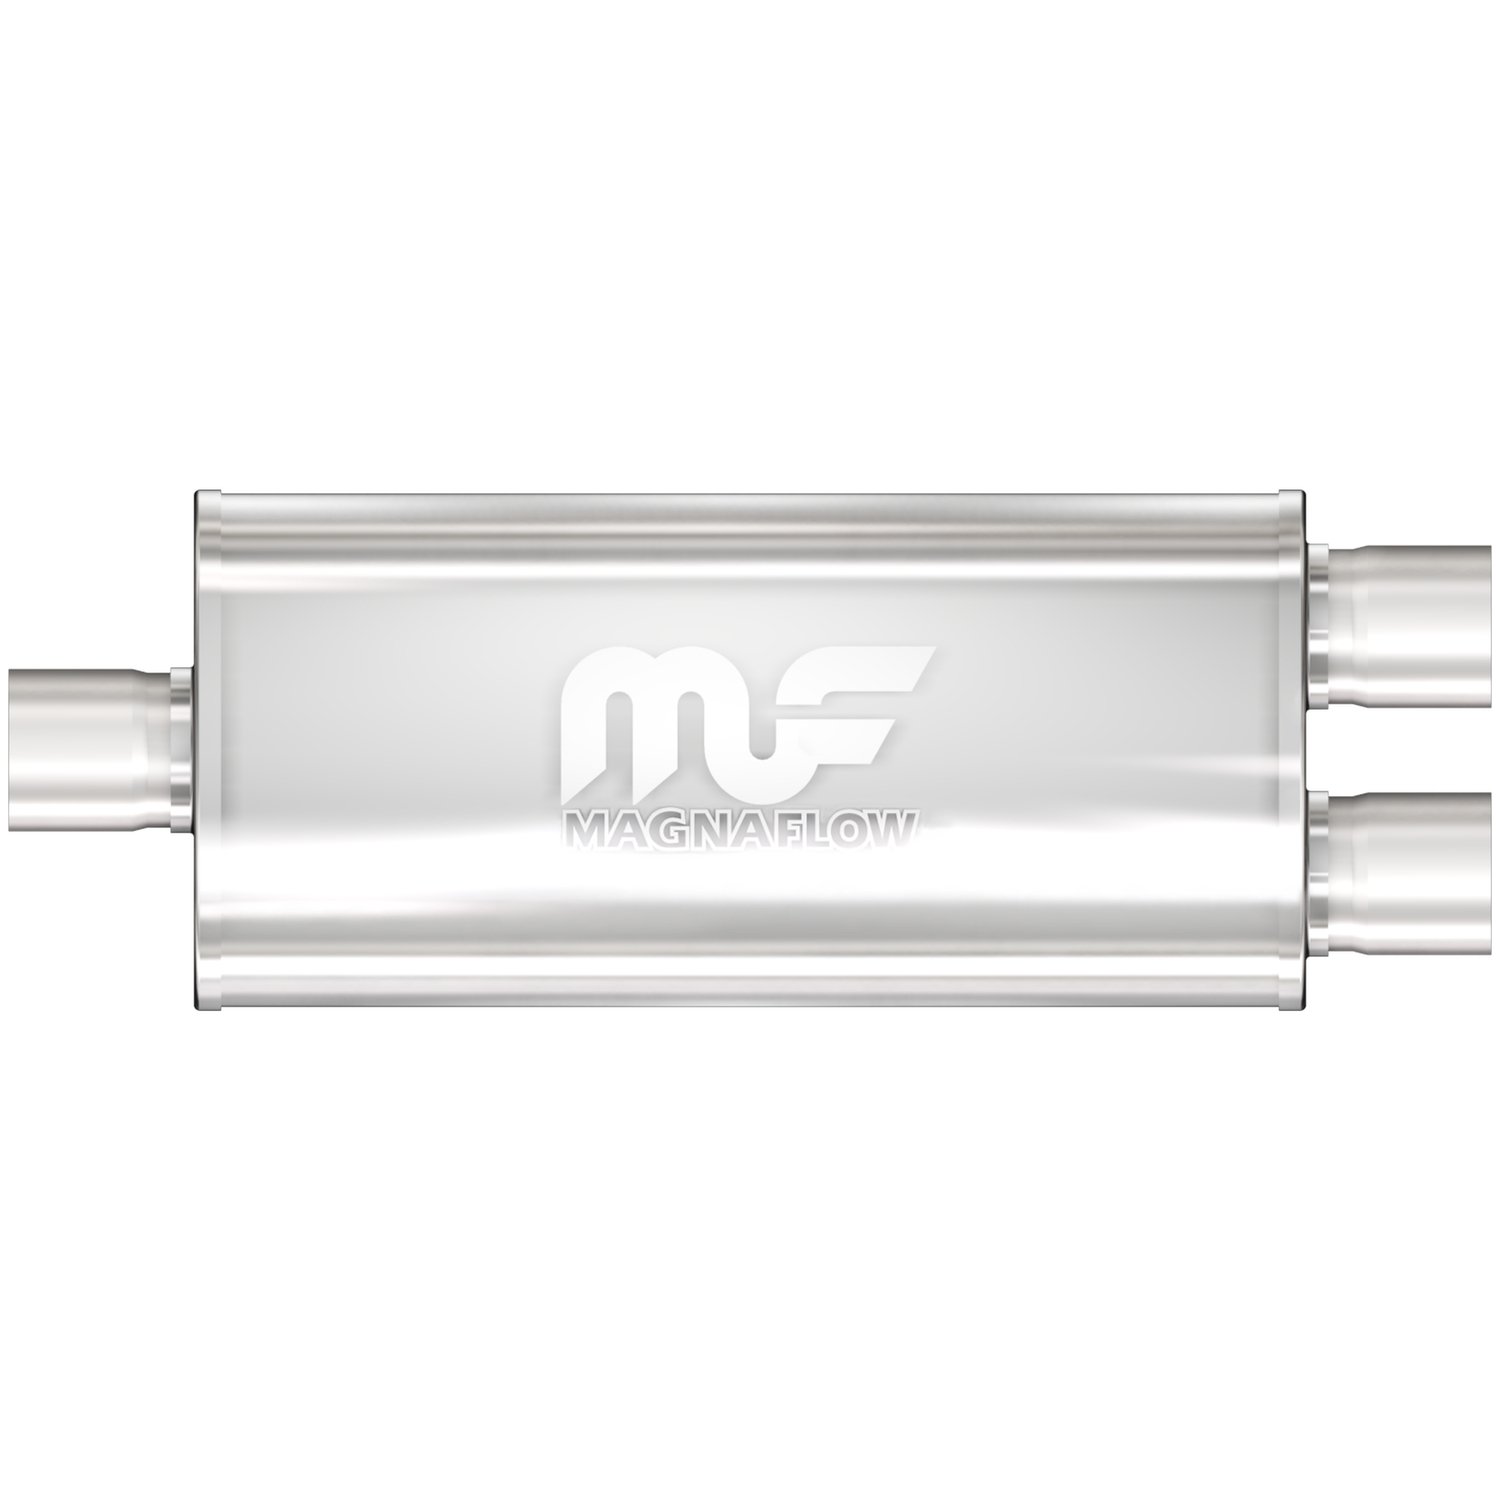 Magnaflow 12138 Exhaust Muffler 2.25 Single/Dual 5" X 8" Oval Straight-Through